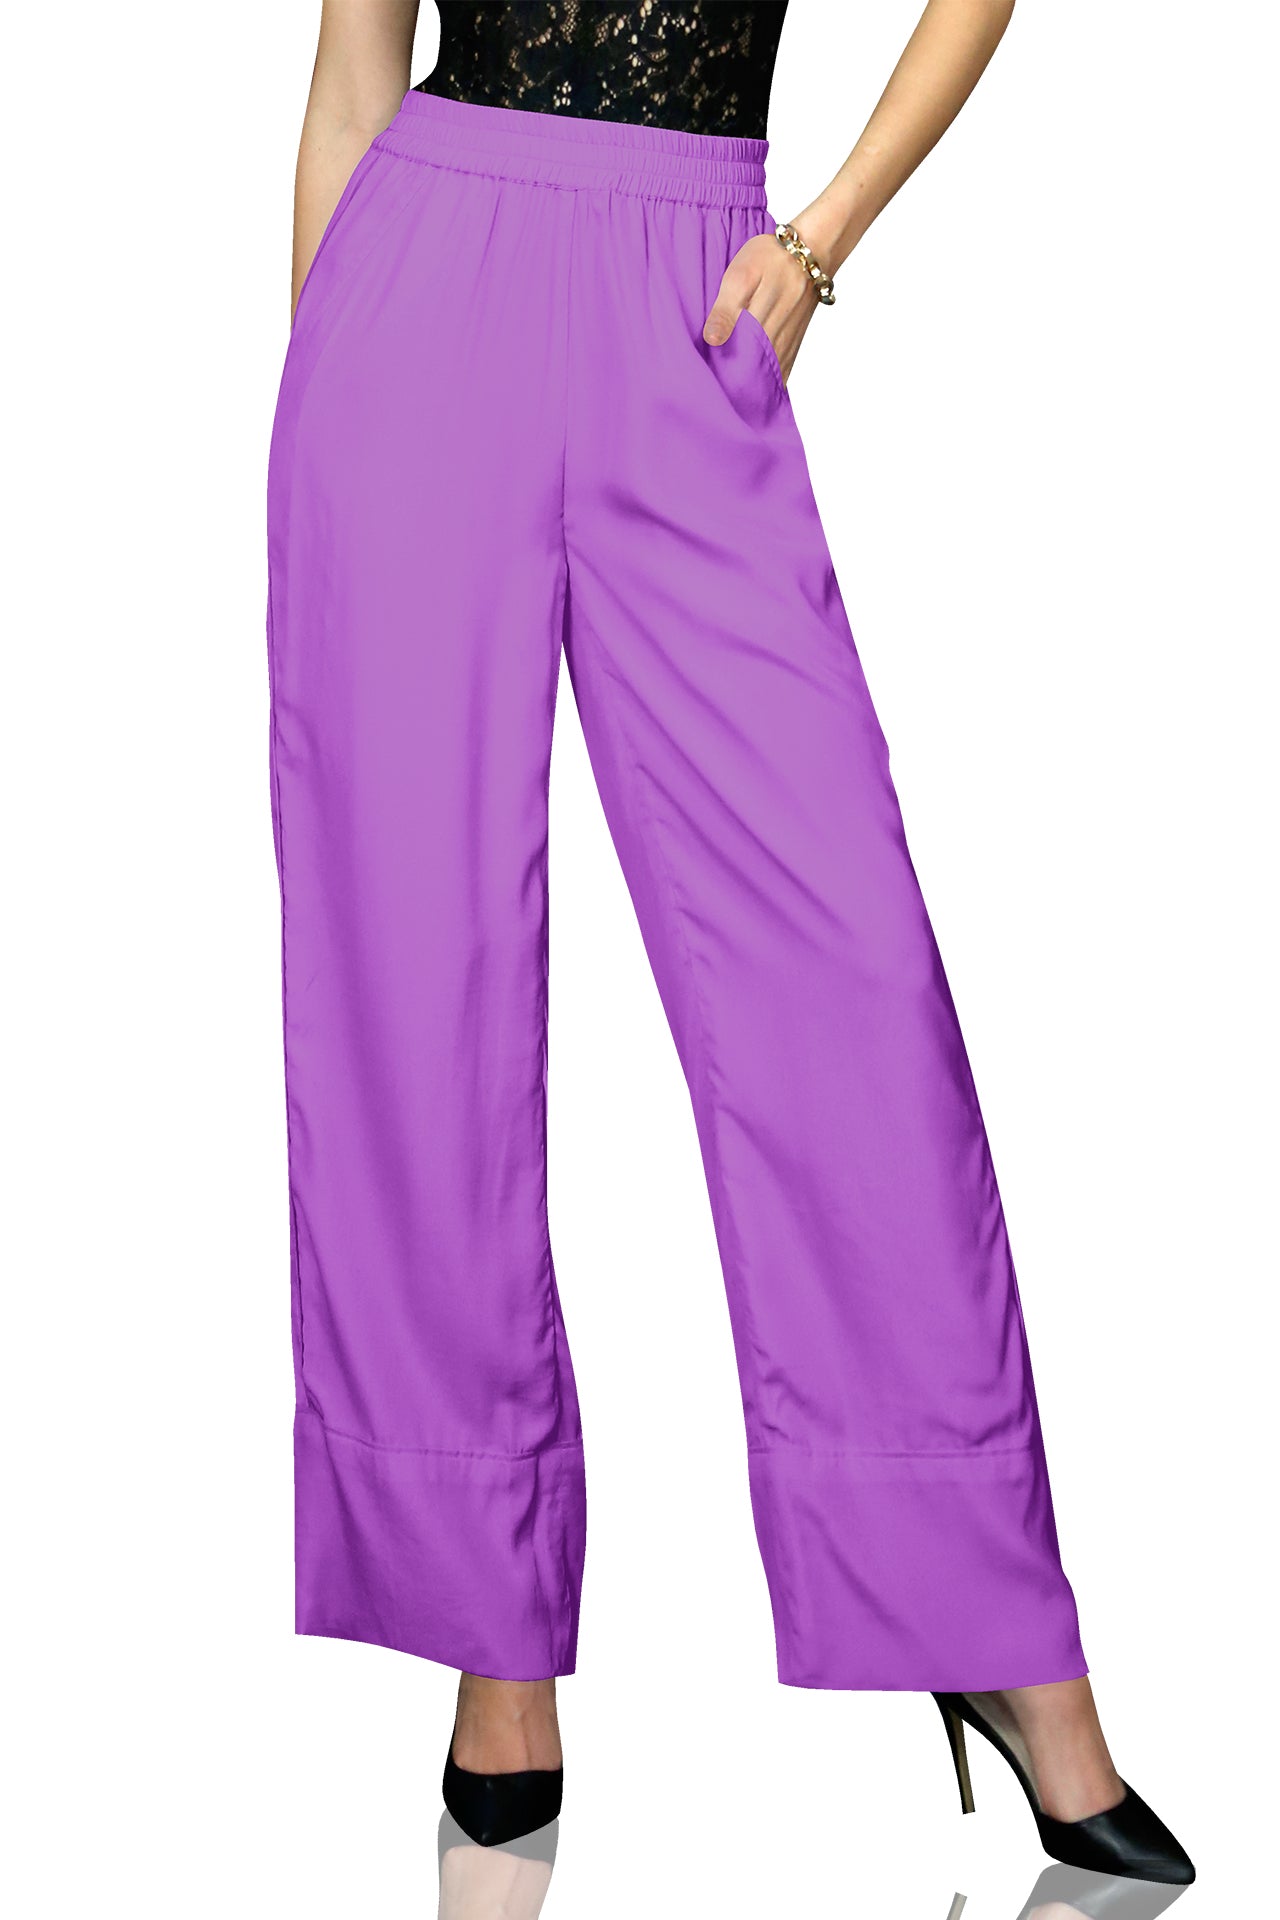 "plazzo pant for women" "Kyle X Shahida" "lavender pants womens" "plazzos for women"